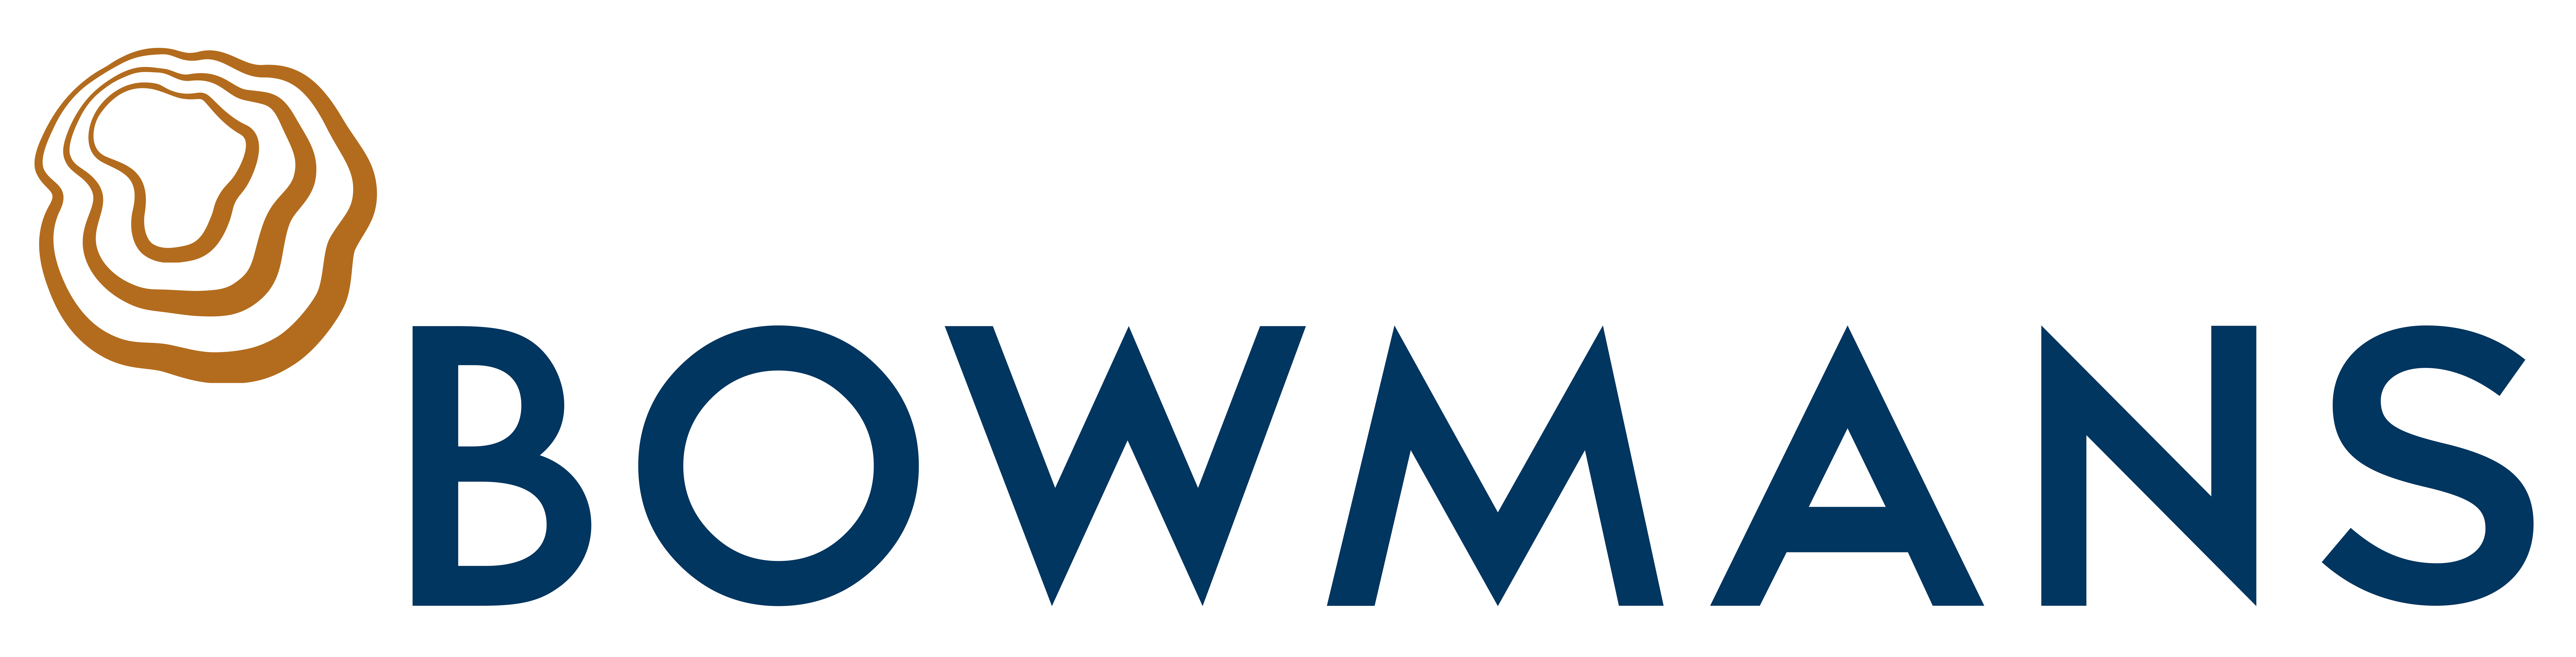 Bowmans company logo